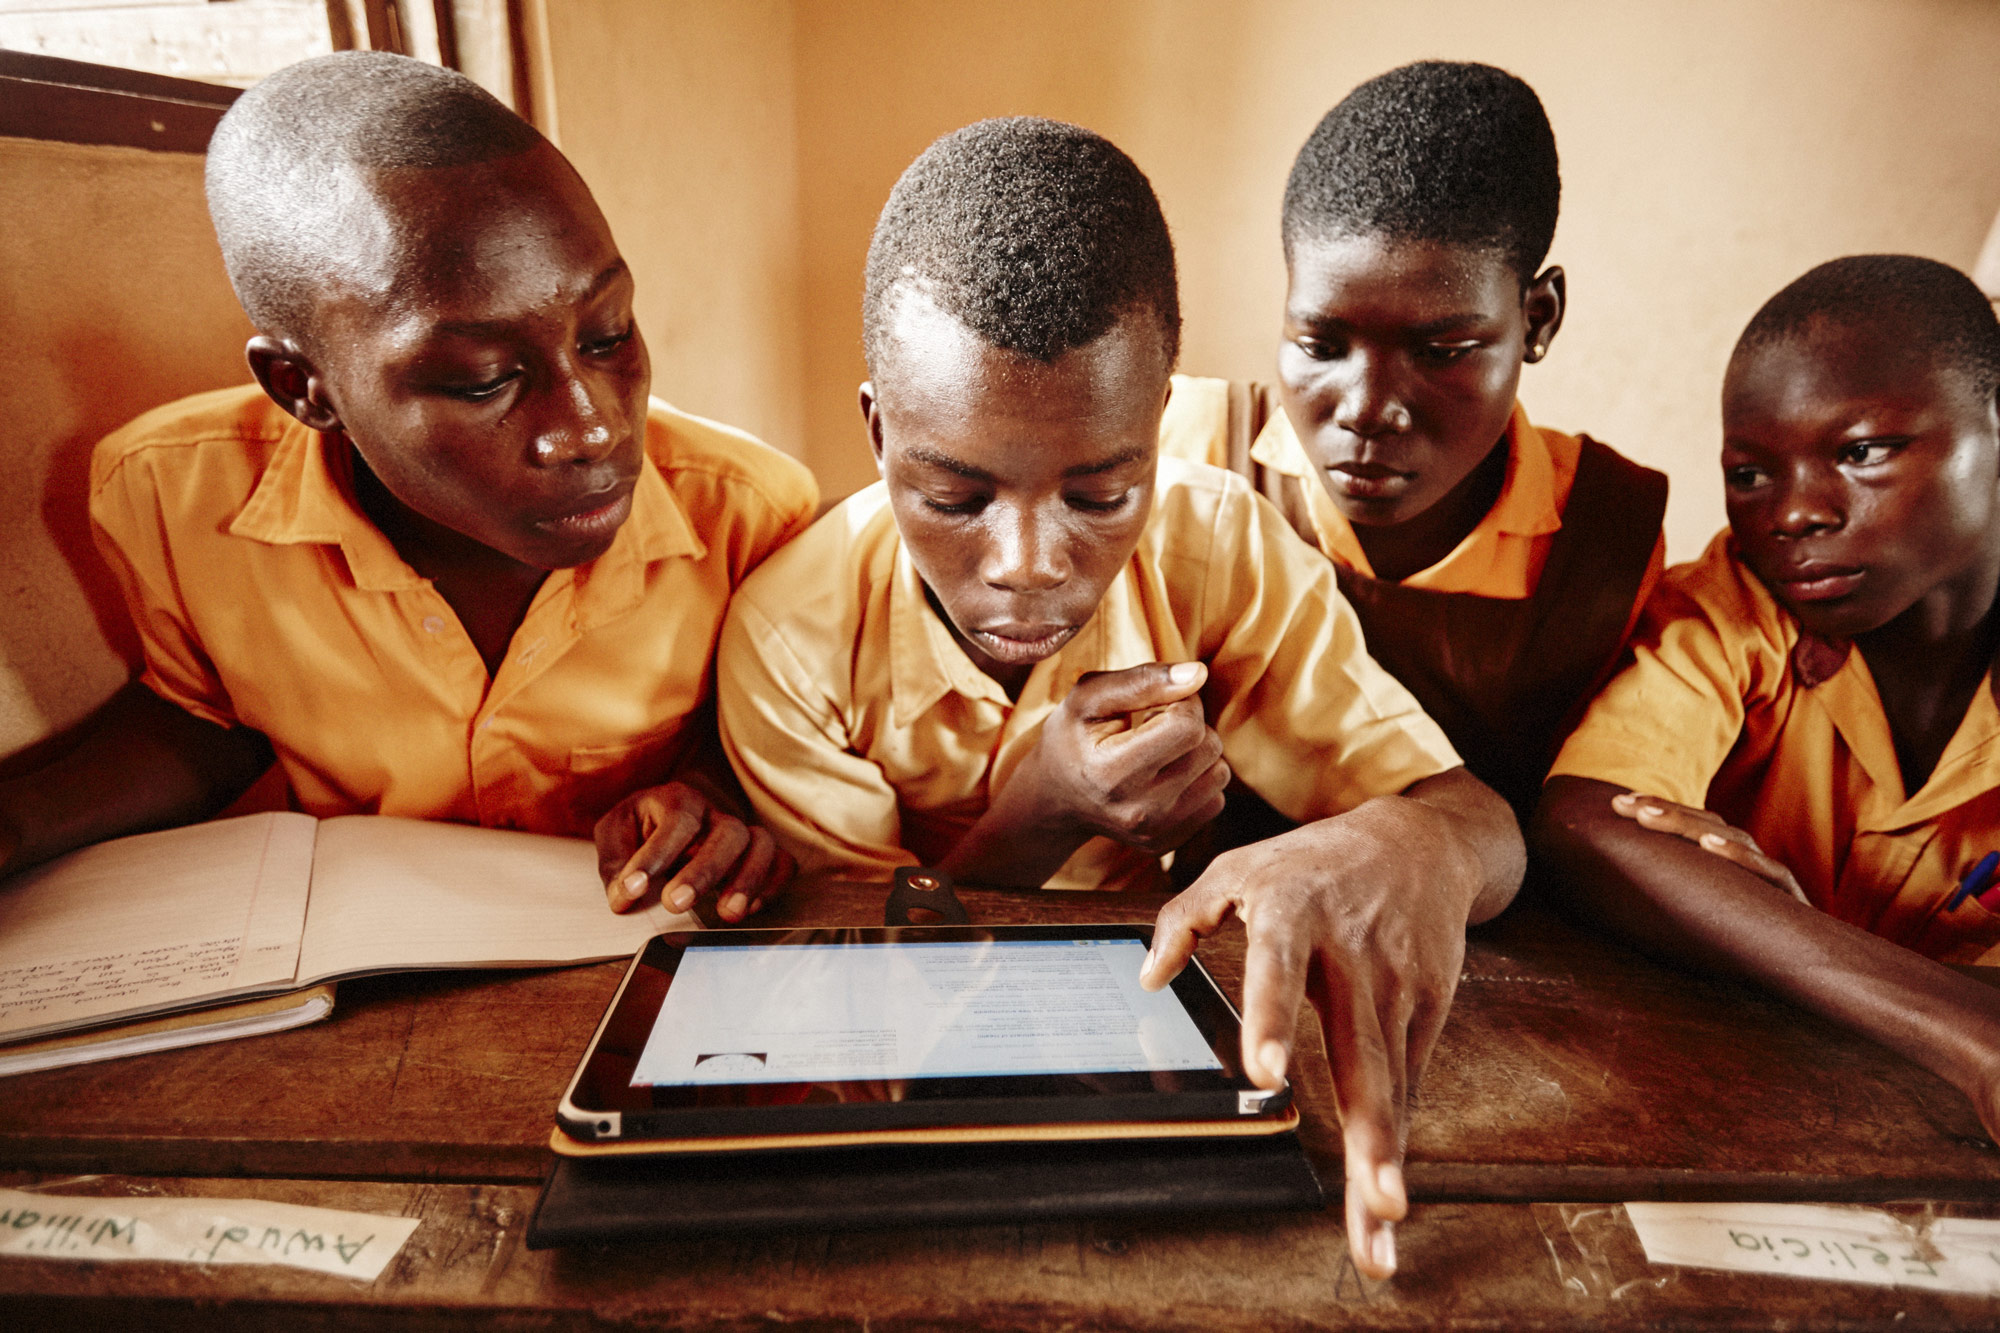 Ghana children in classroom with iPad